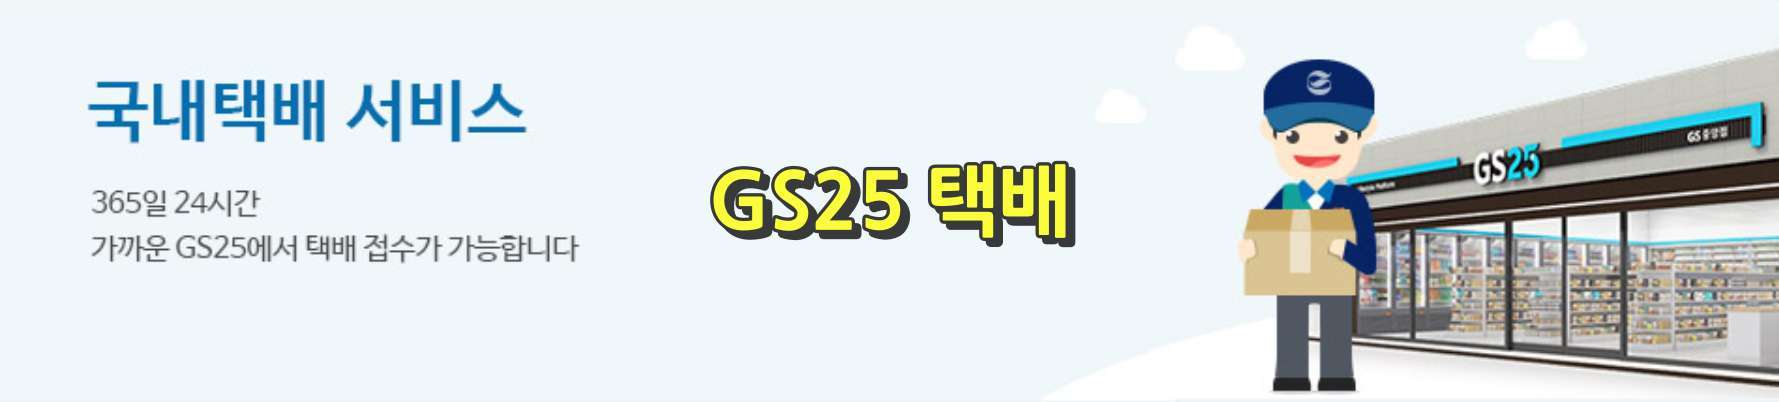 GS25 택배